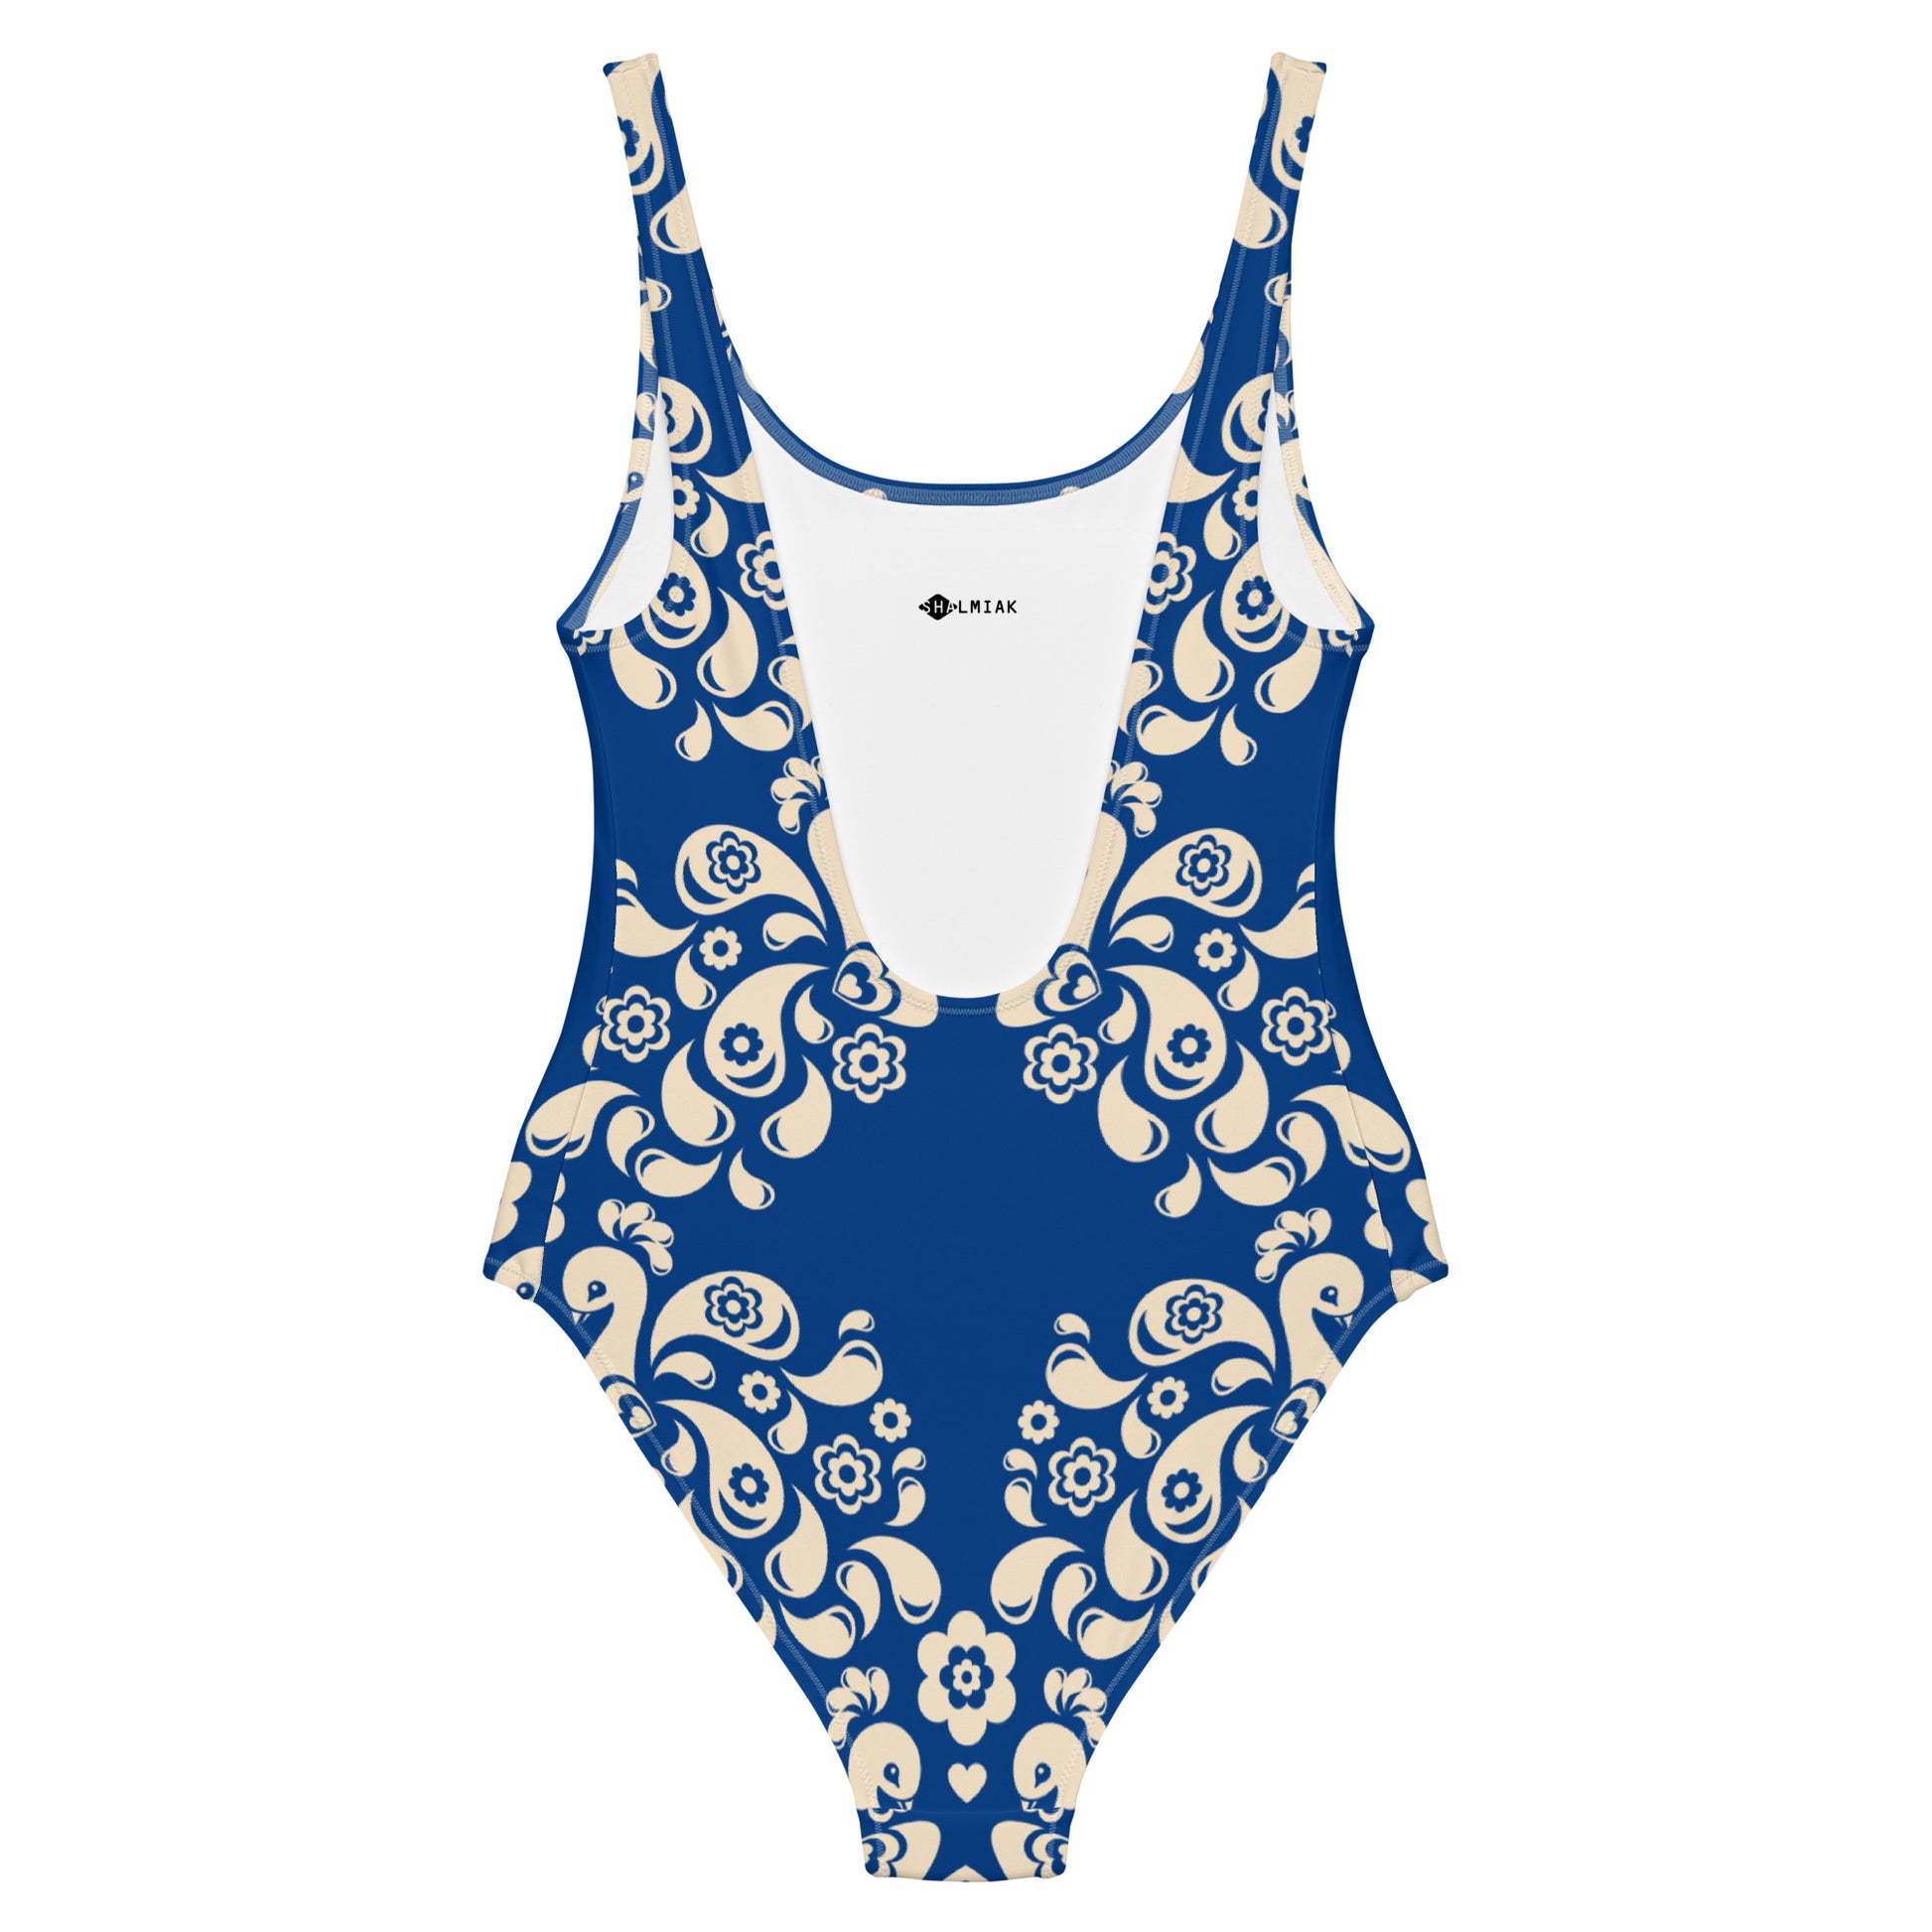 PEACOCK LOVE blue - One-Piece Swimsuit